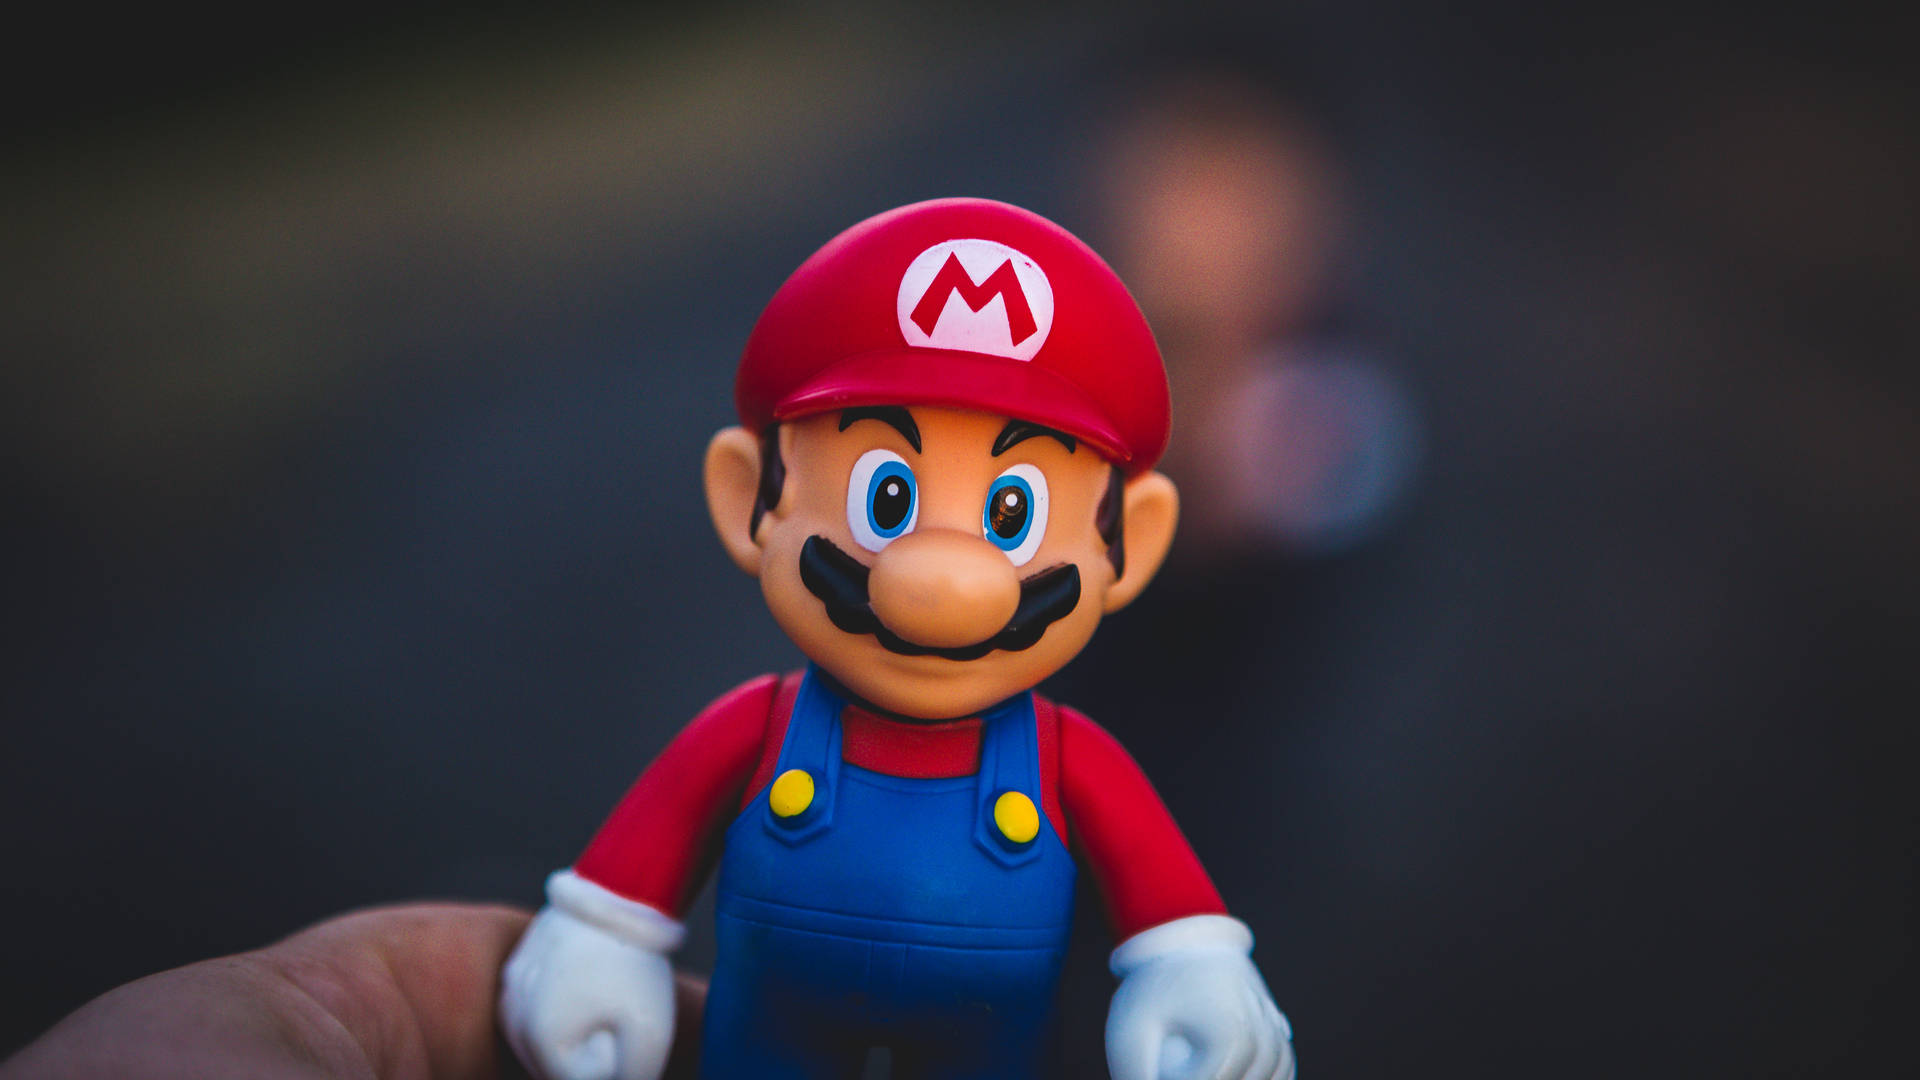 Gamer Super Mario Figurine Background